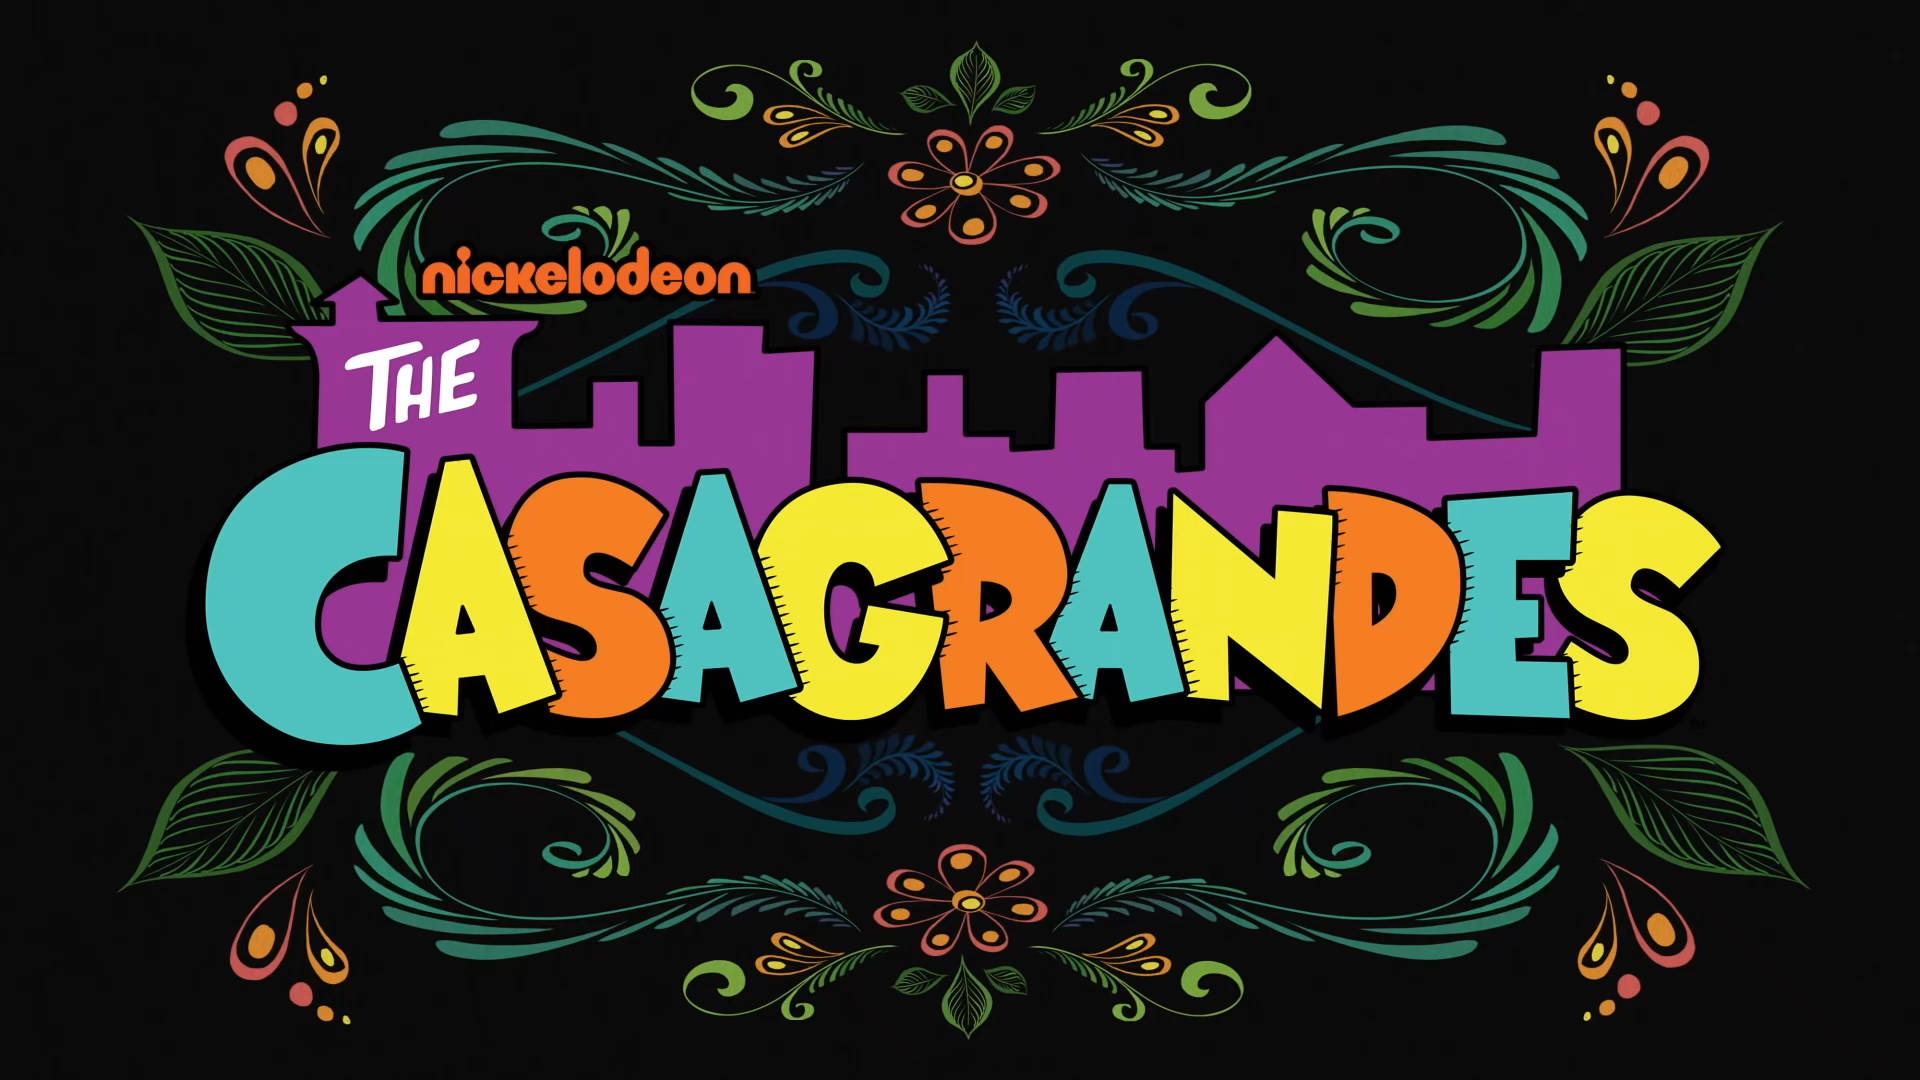 The Casagrandes Background